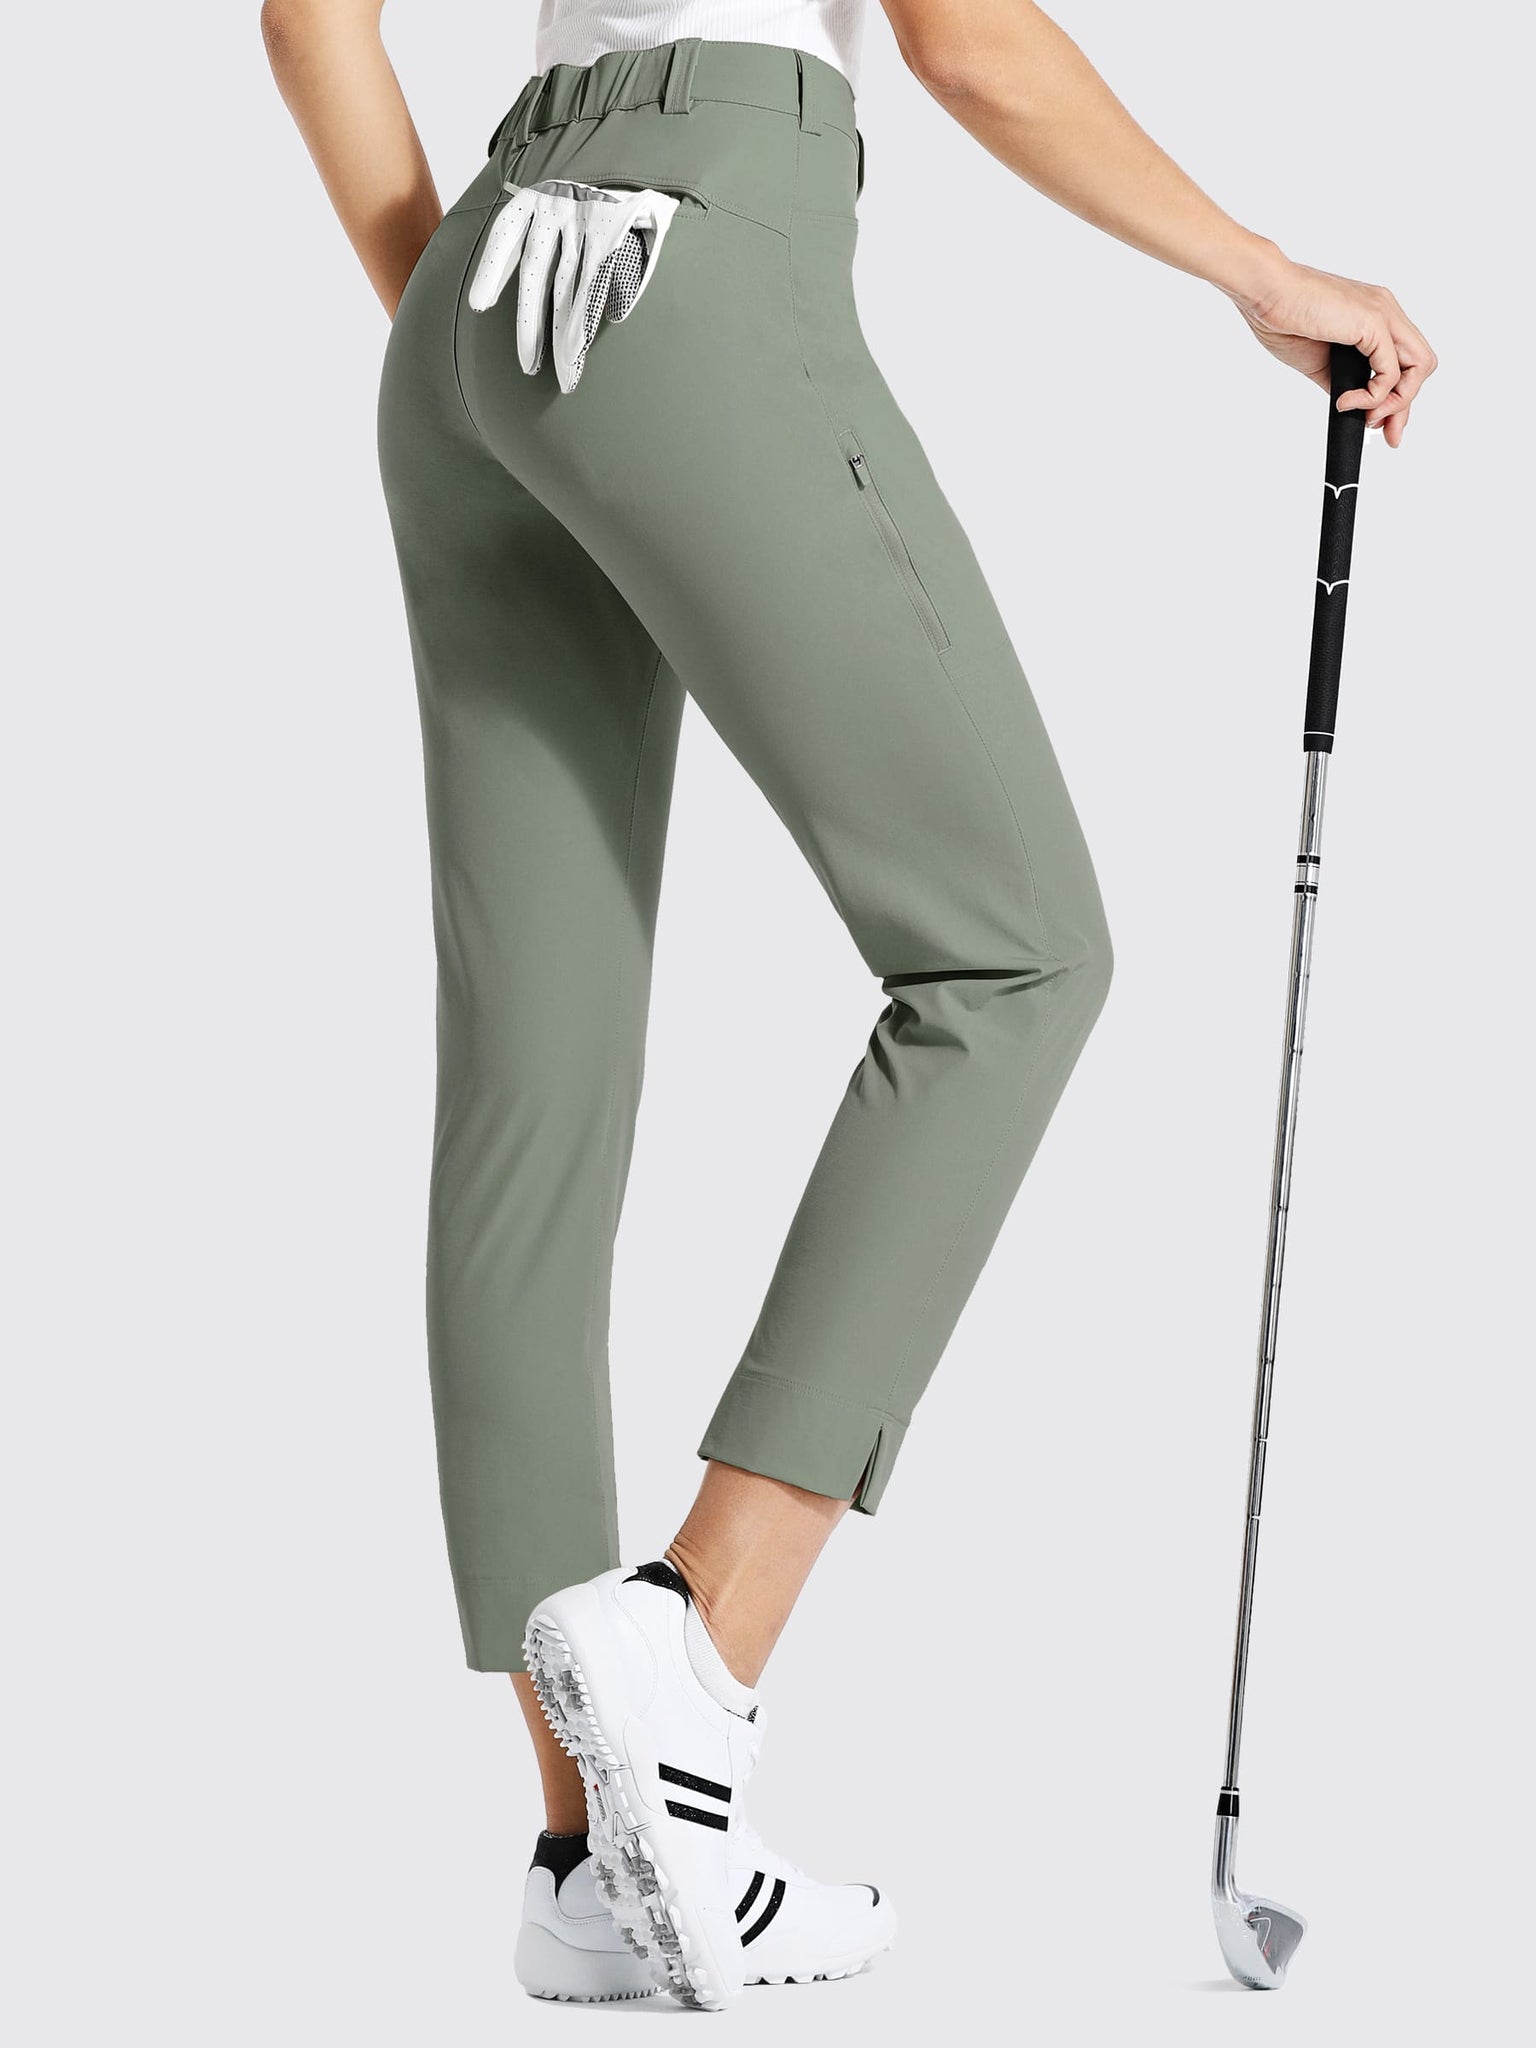 Women's Ultimate Golf Capris Plus #823W